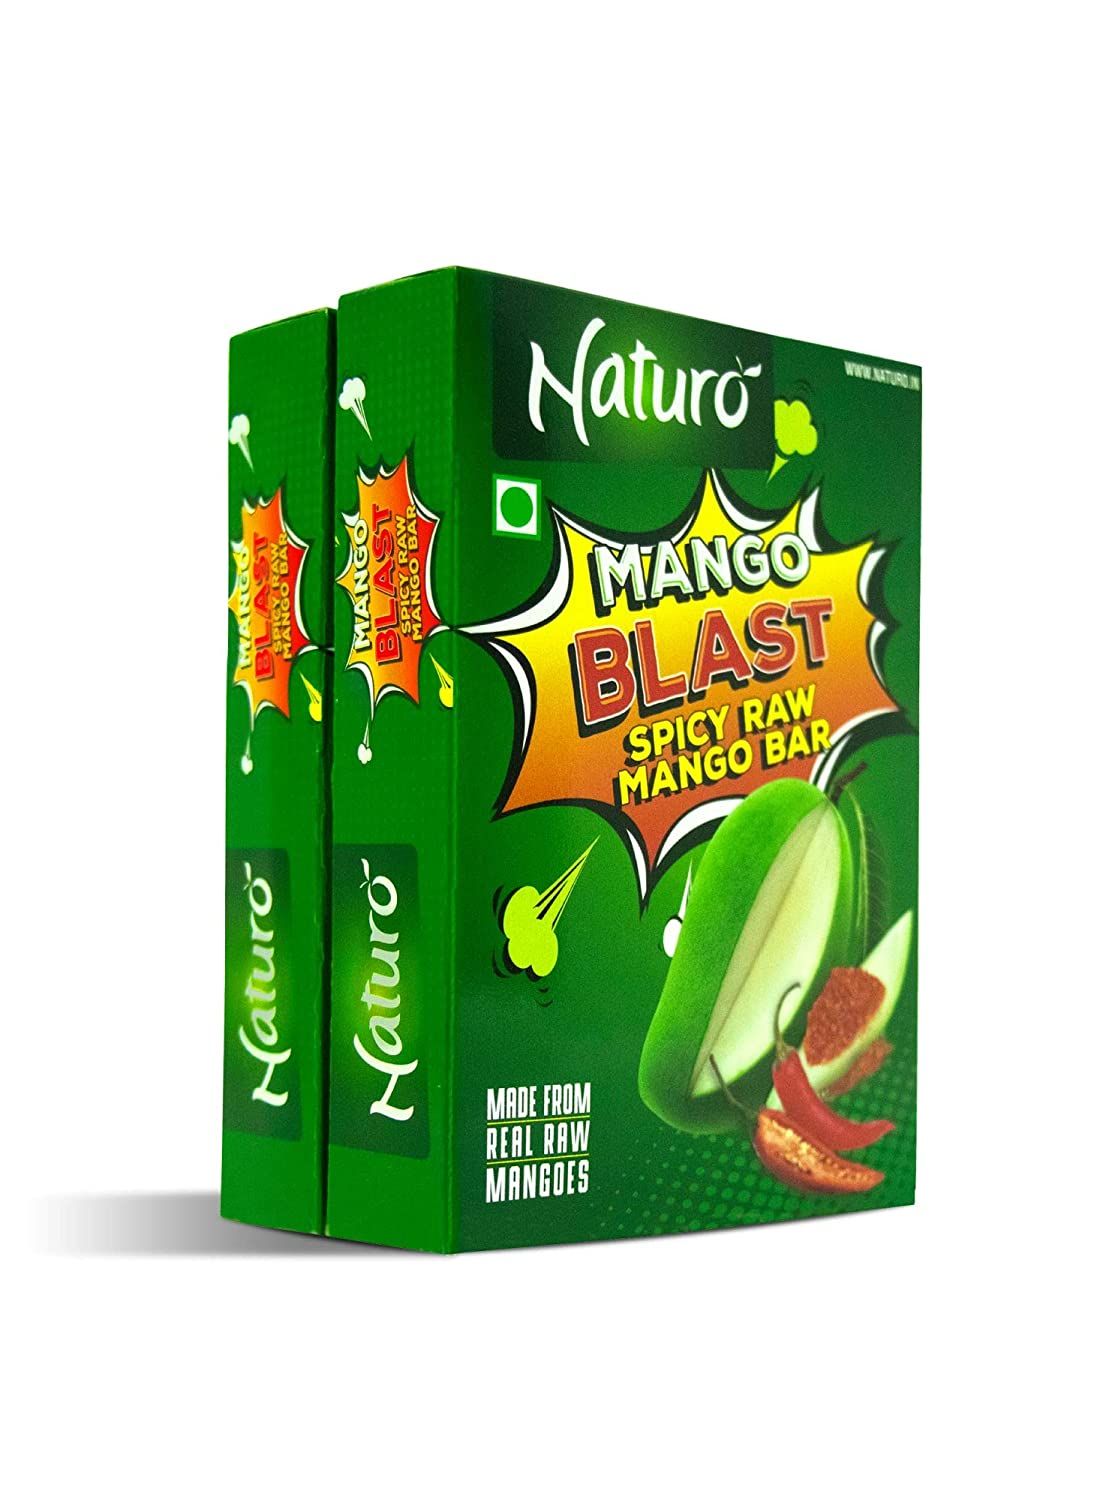 Naturo Spicy Raw Mango Bar Image